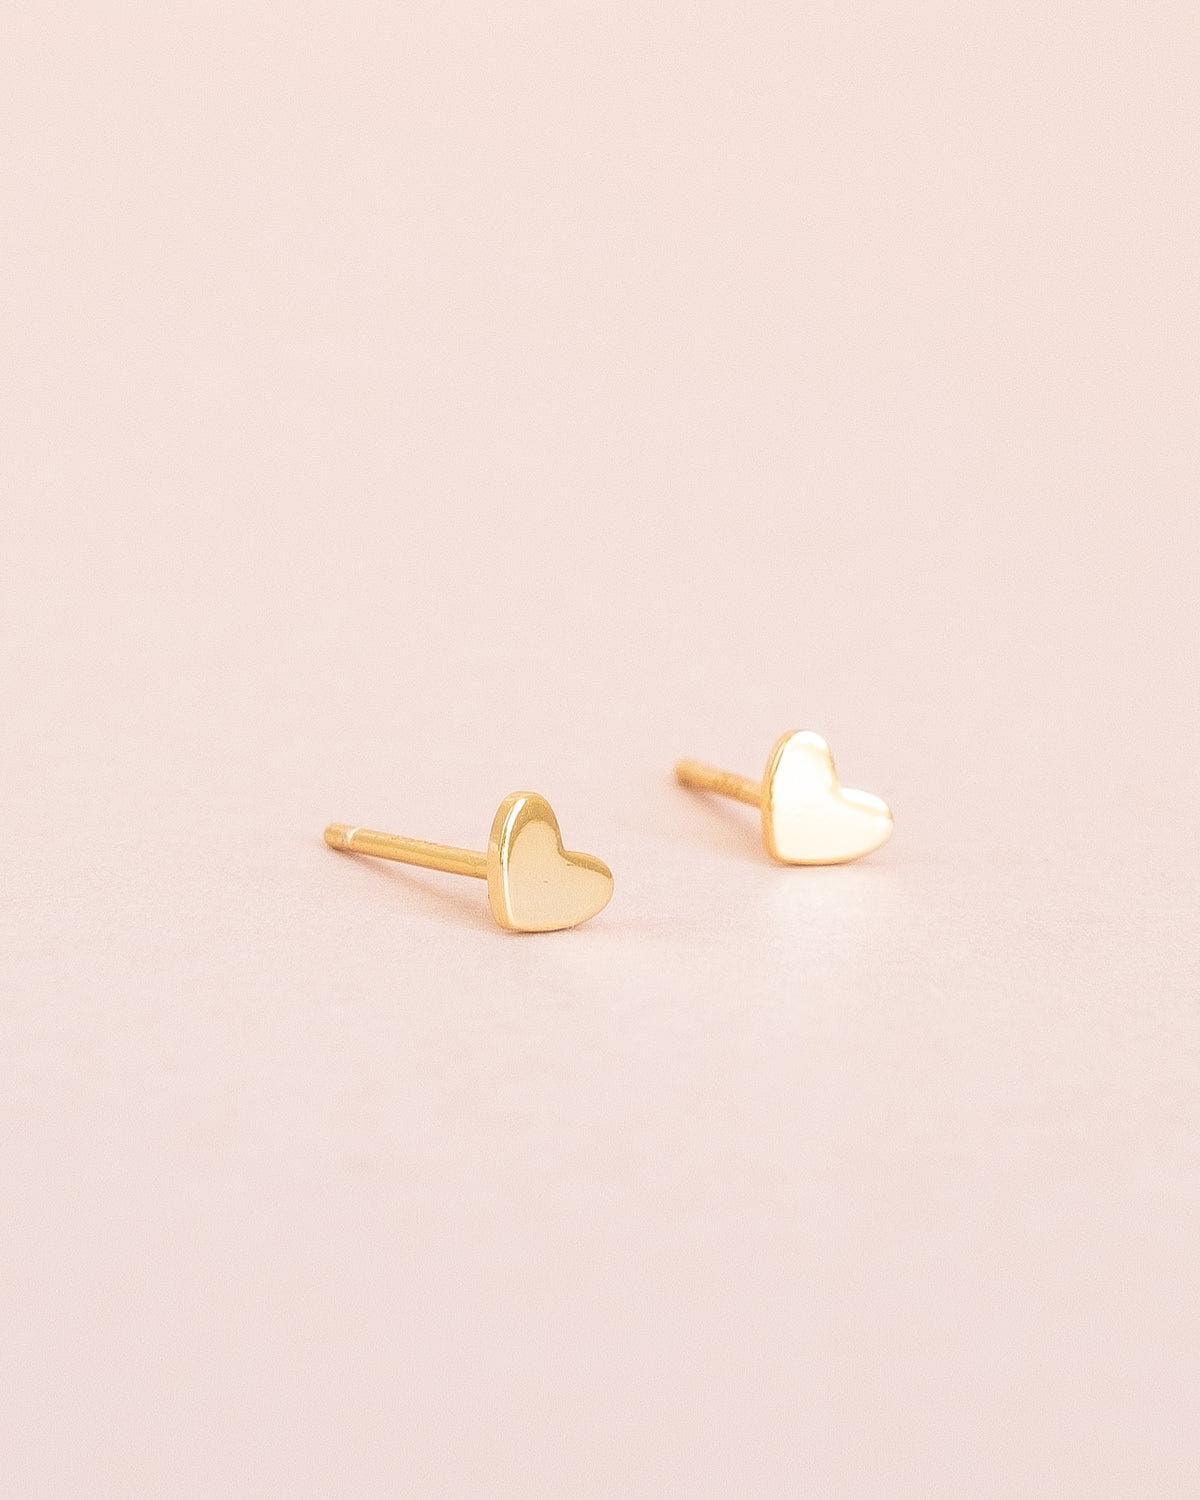 Teeny tiny earrings 18k Gold heart studs freeshipping - Ollijewelry